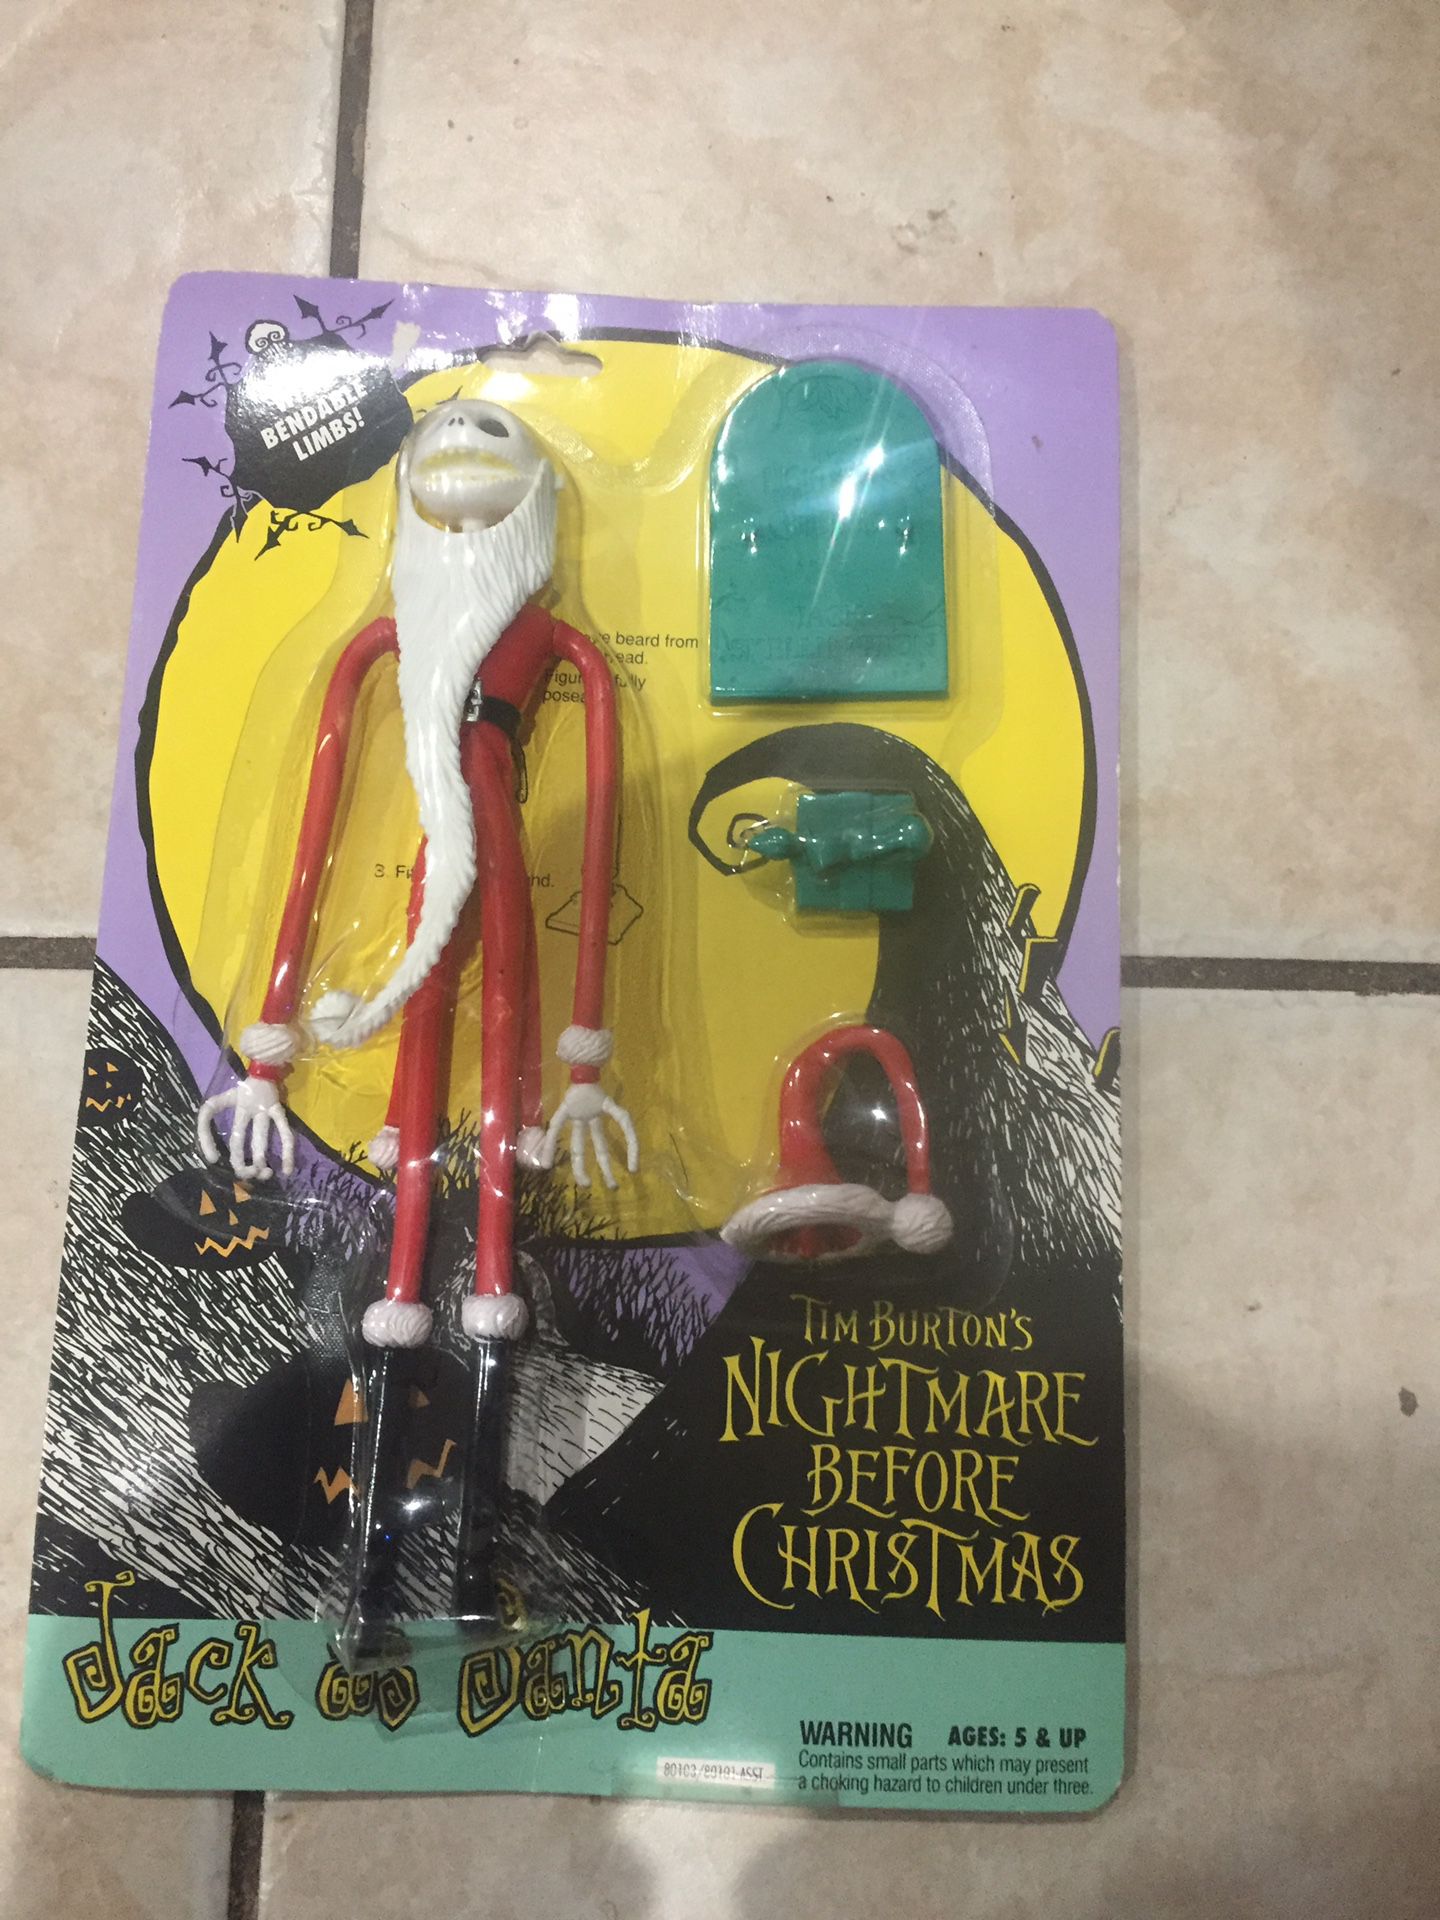 Nightmare before Christmas